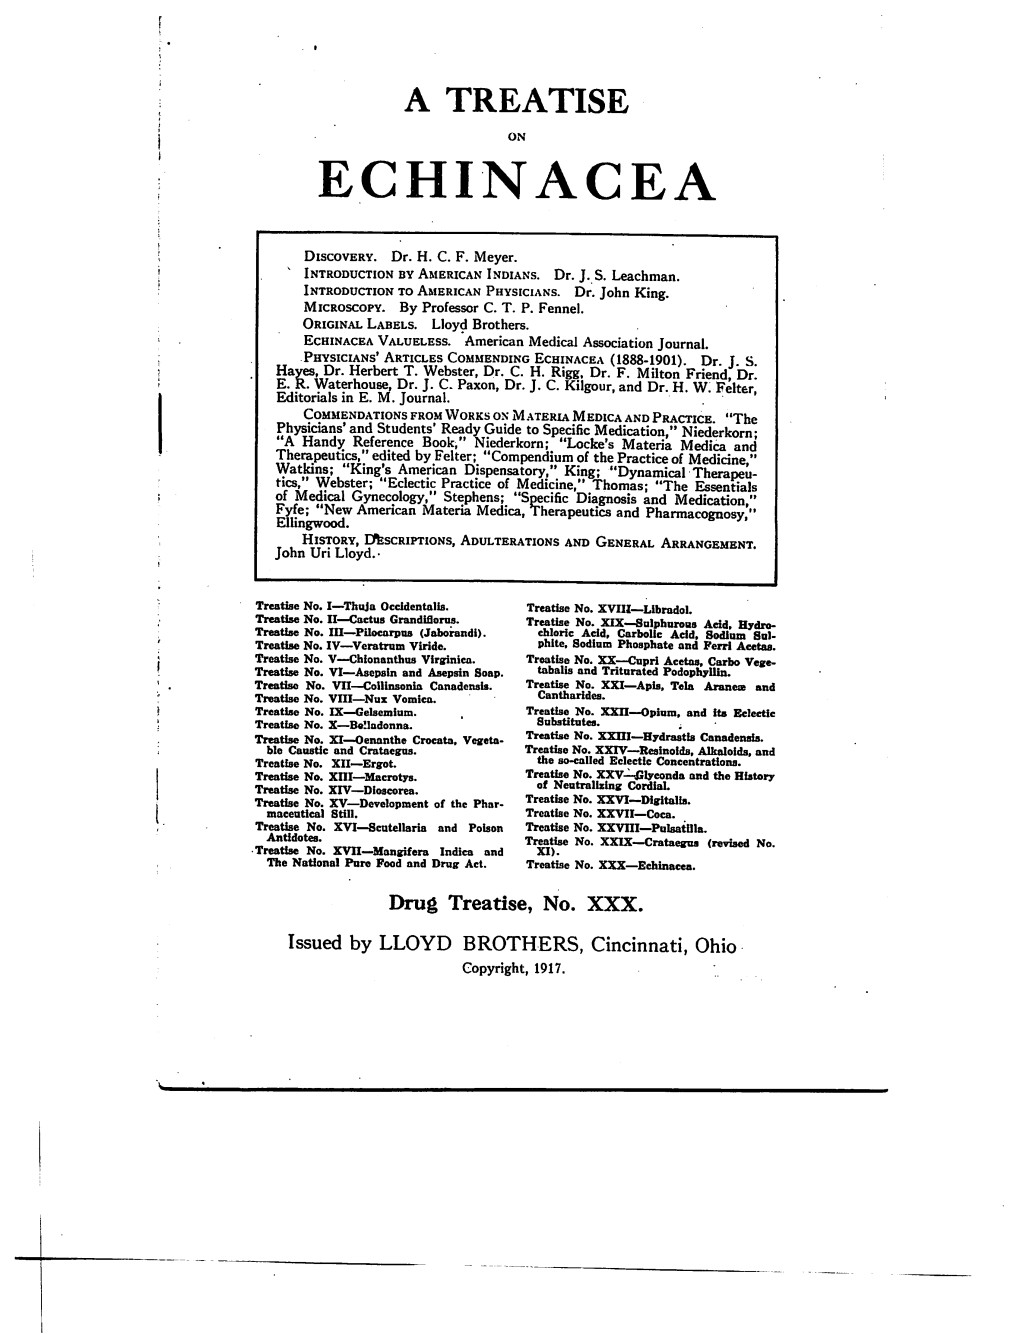 A Treatise on Echinacea, 1917